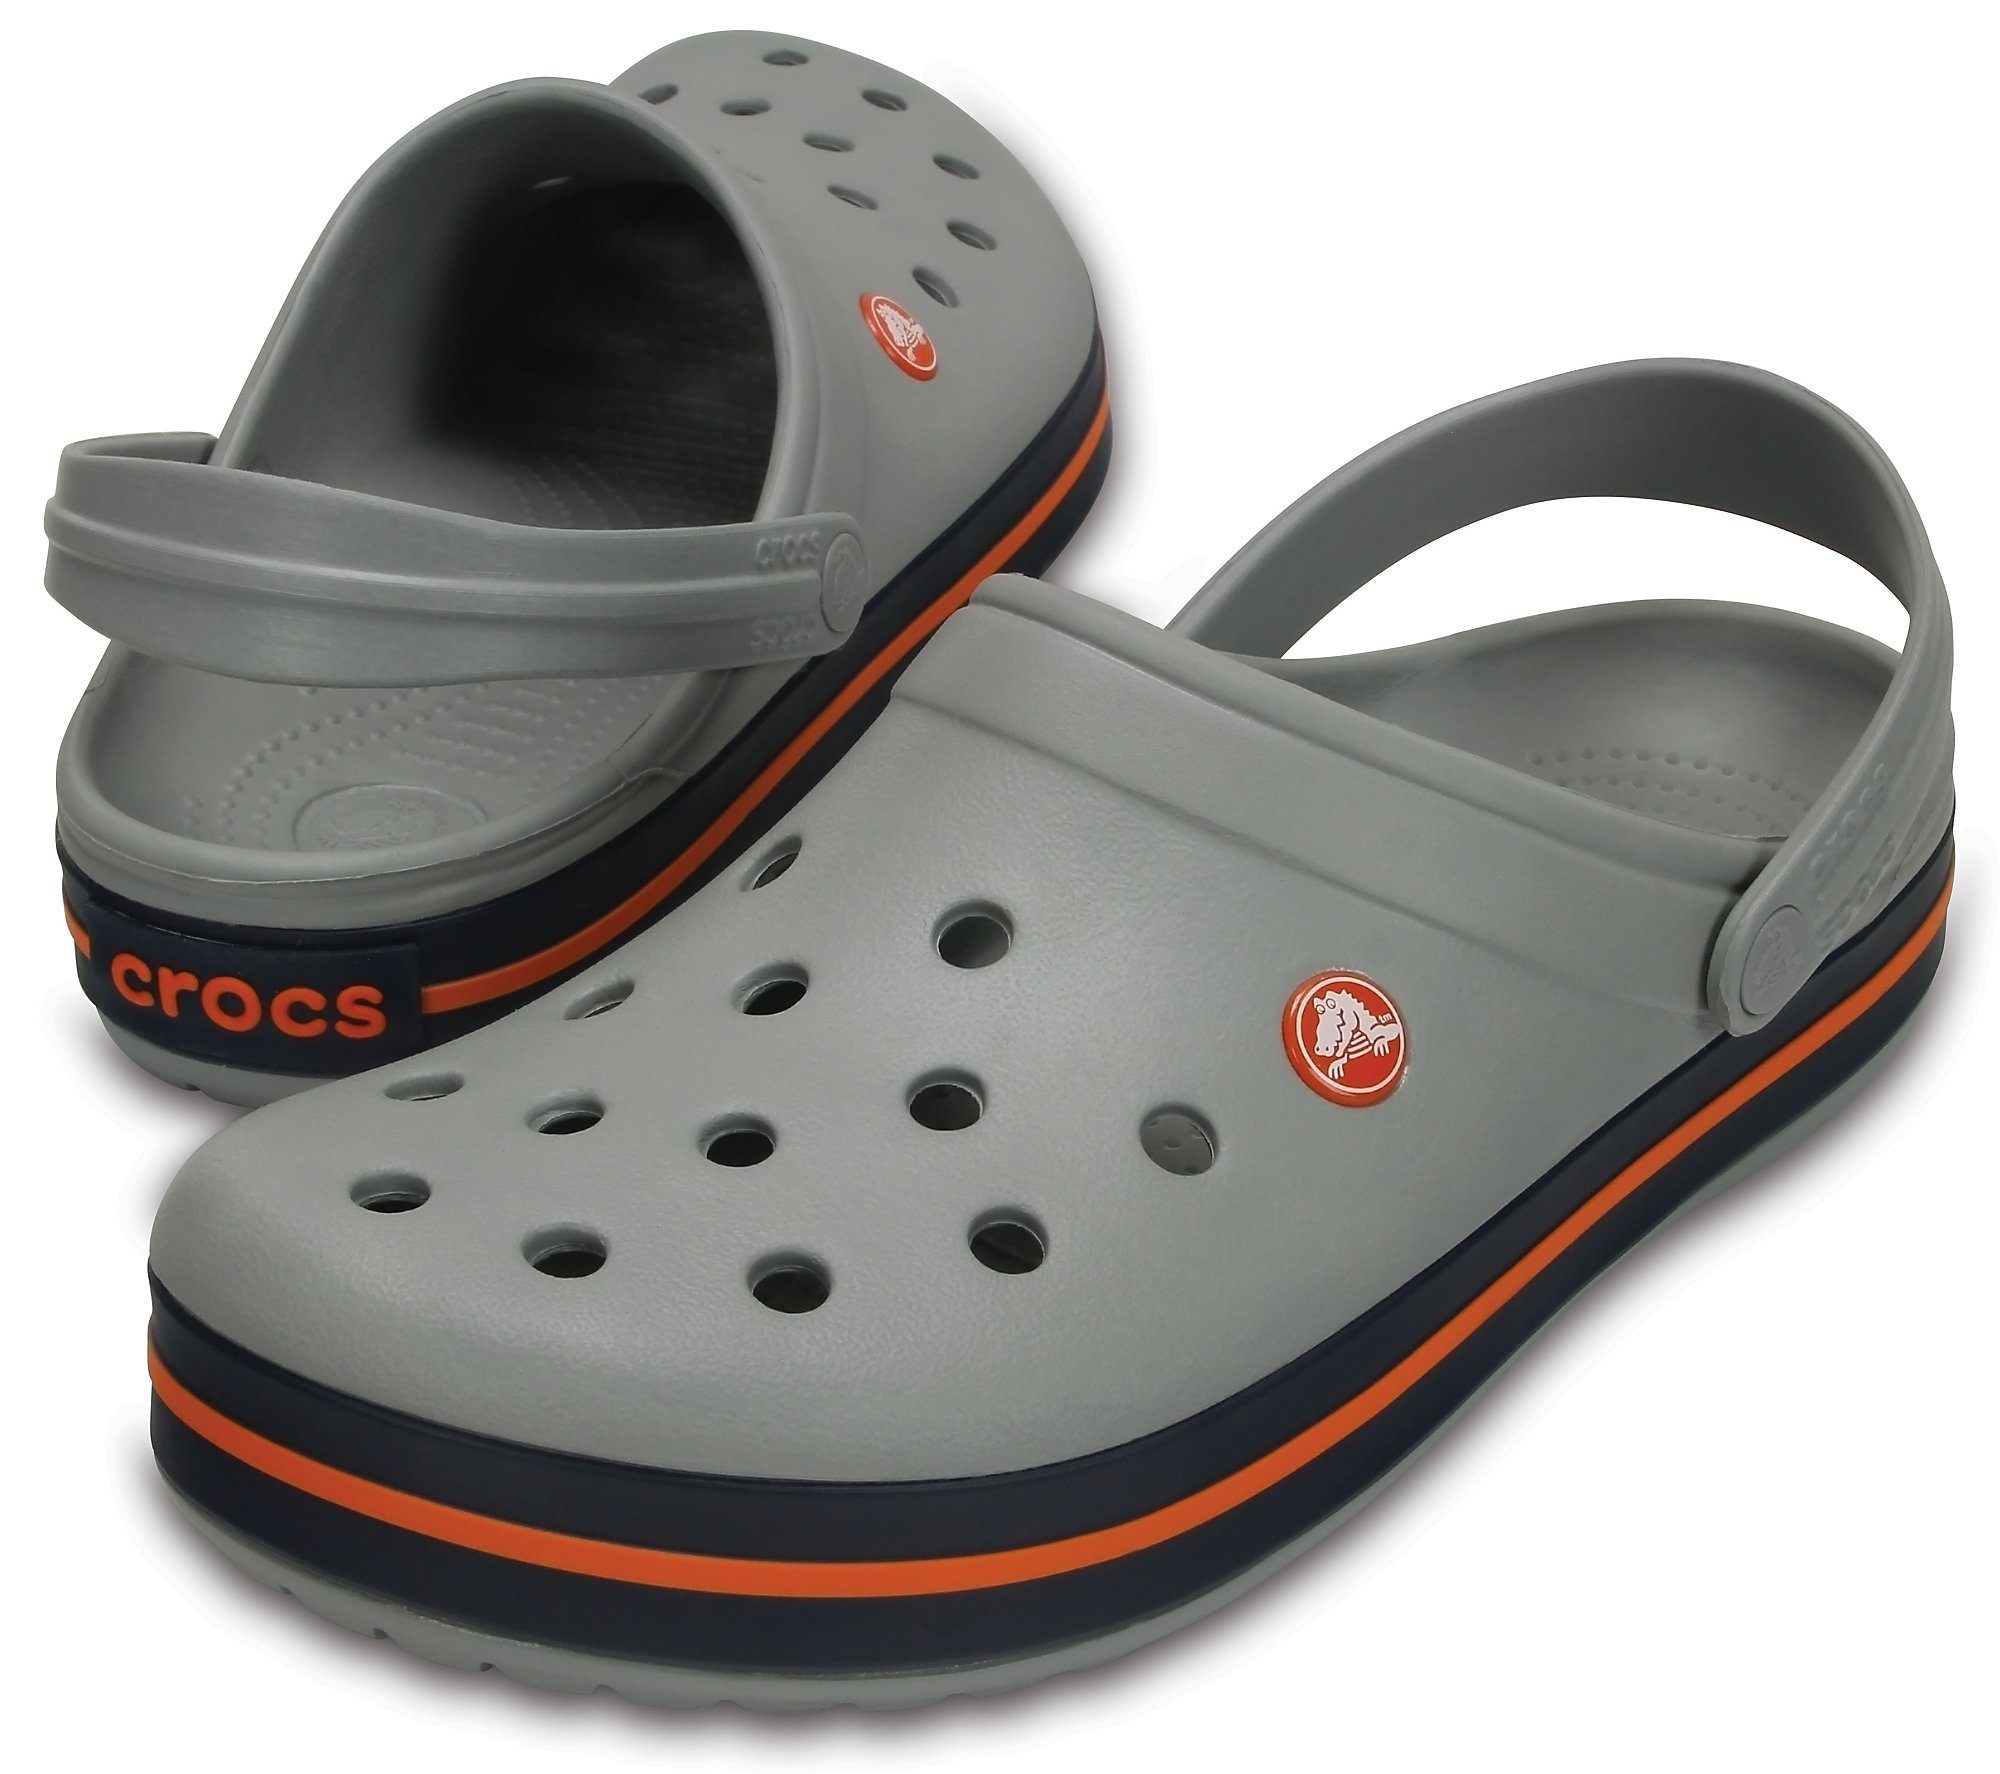 Crocband Crocs Laufsohle grau-schwarz-orange farbiger Clog mit